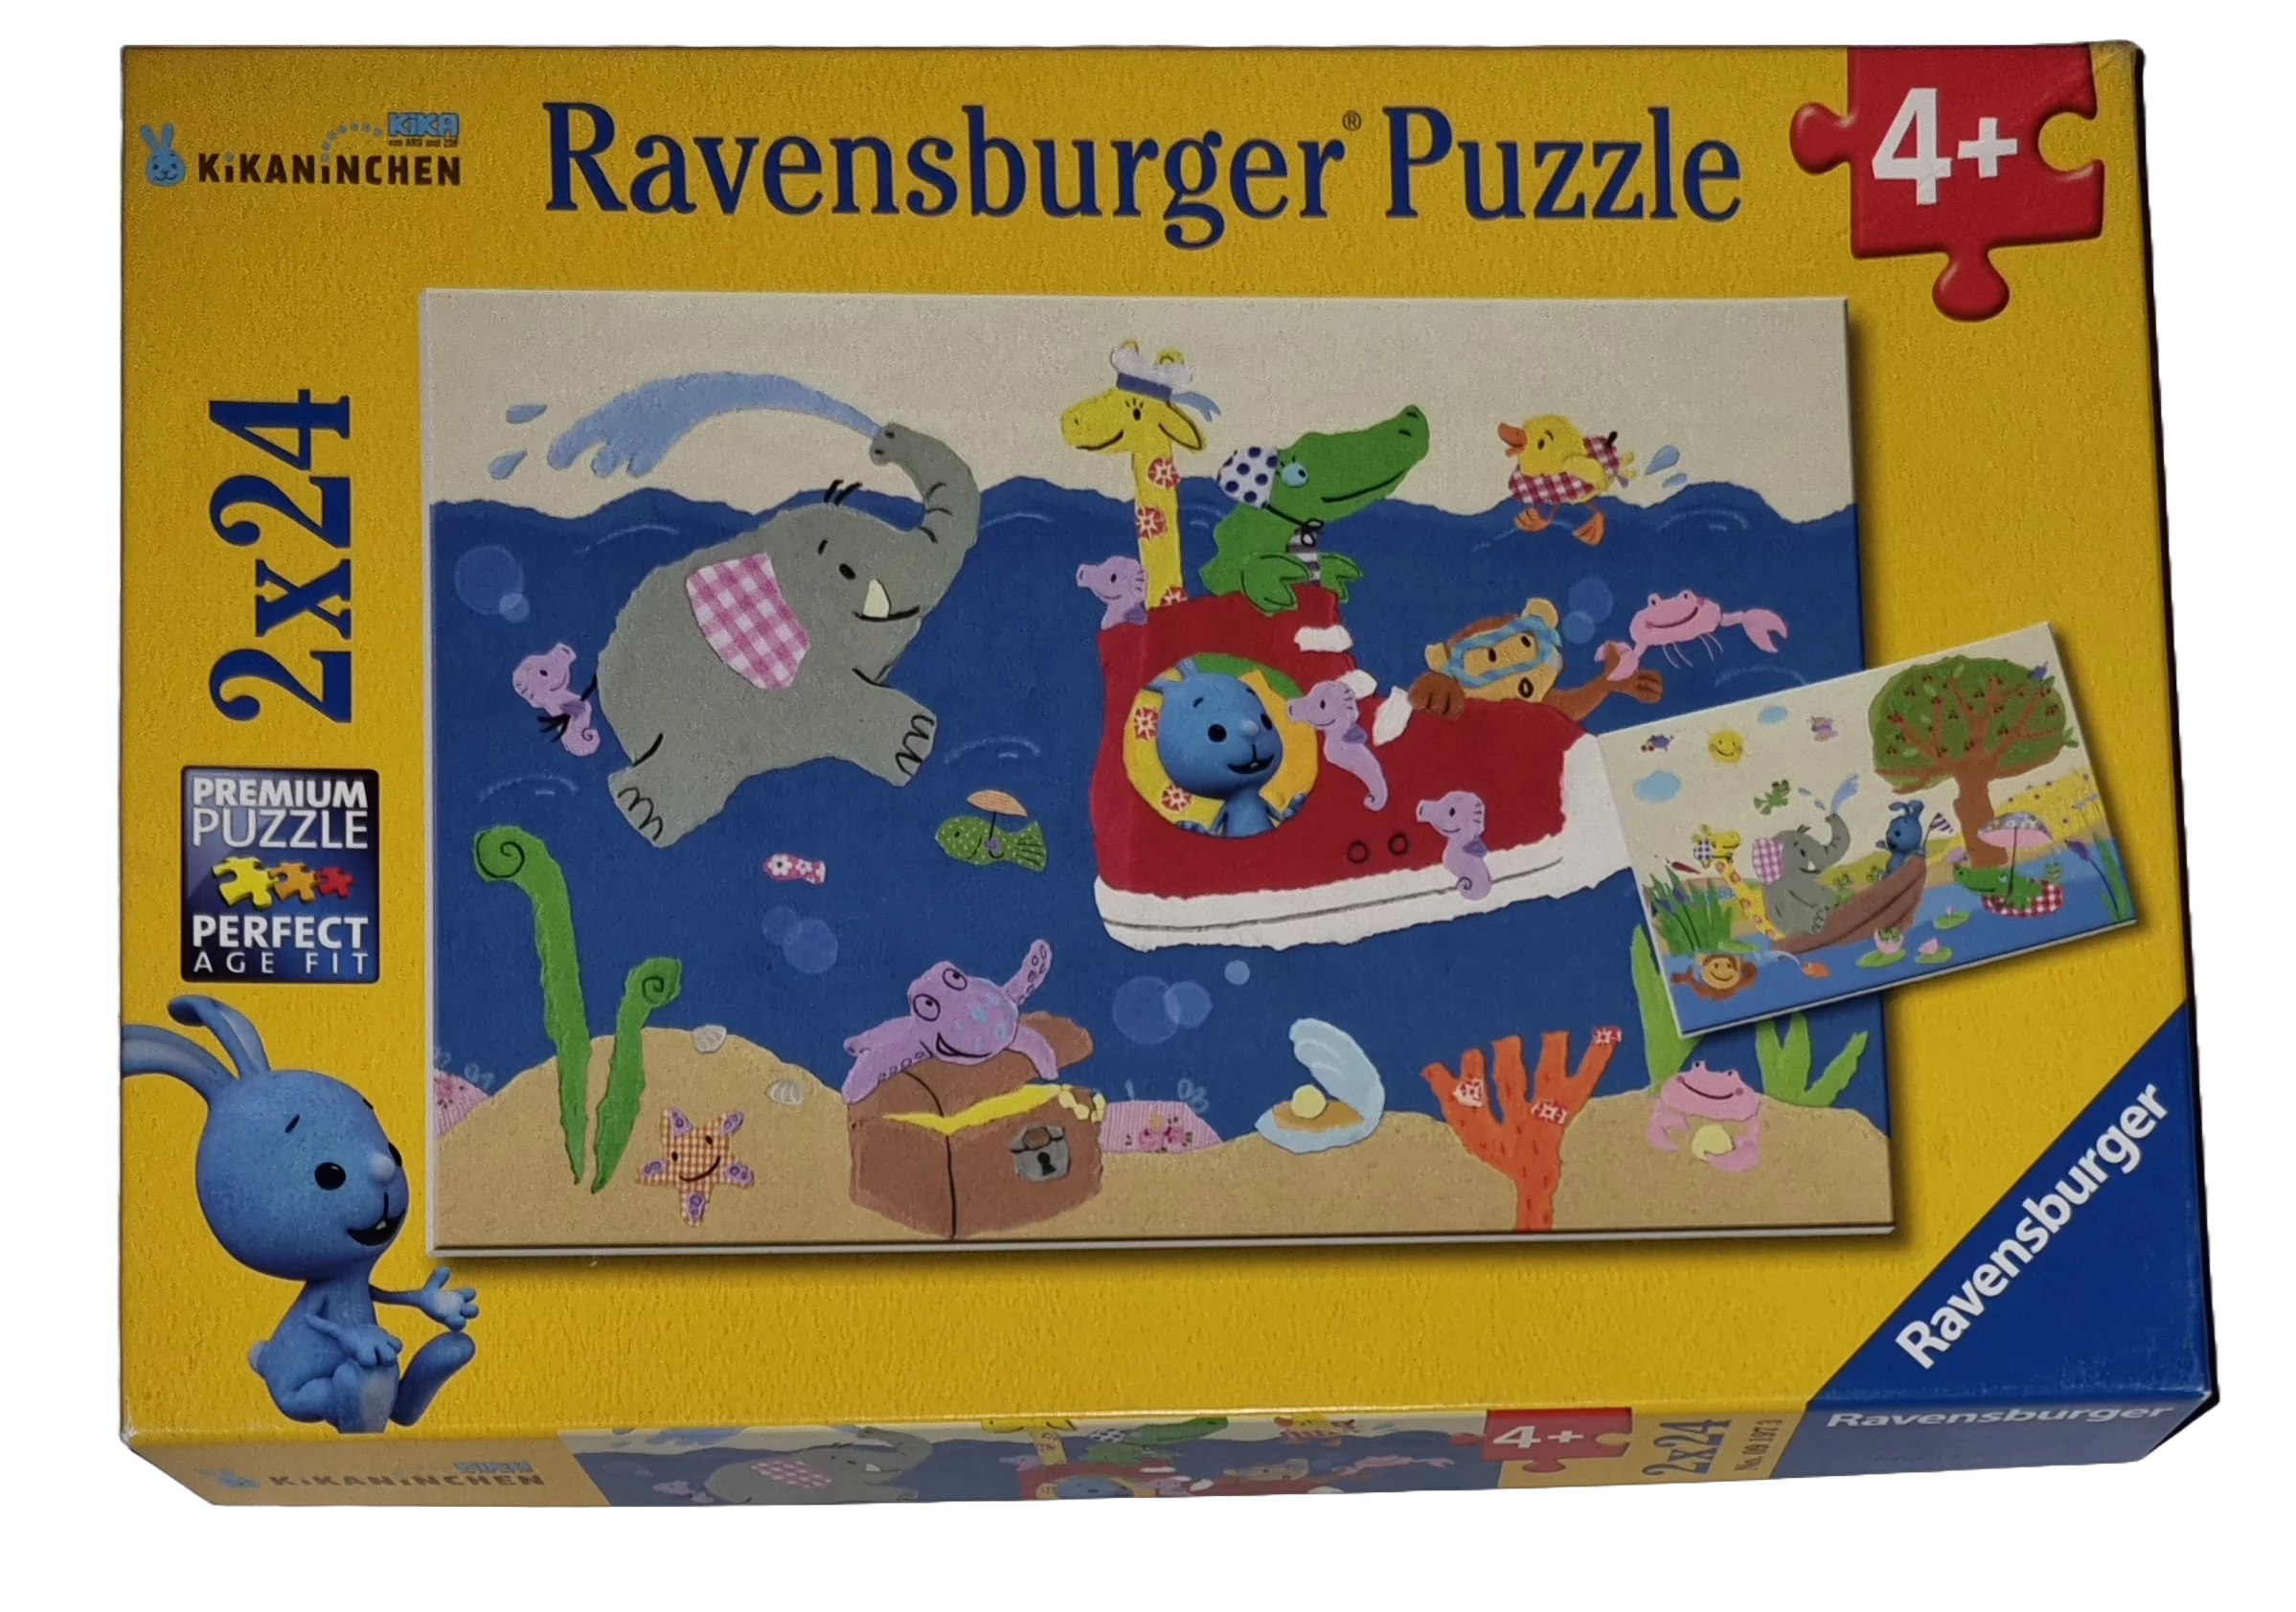 Ravensburger Premium Puzzle Kikaninchen auf Entdeckungsreise 2 x 24 Teile Puzzle 091973